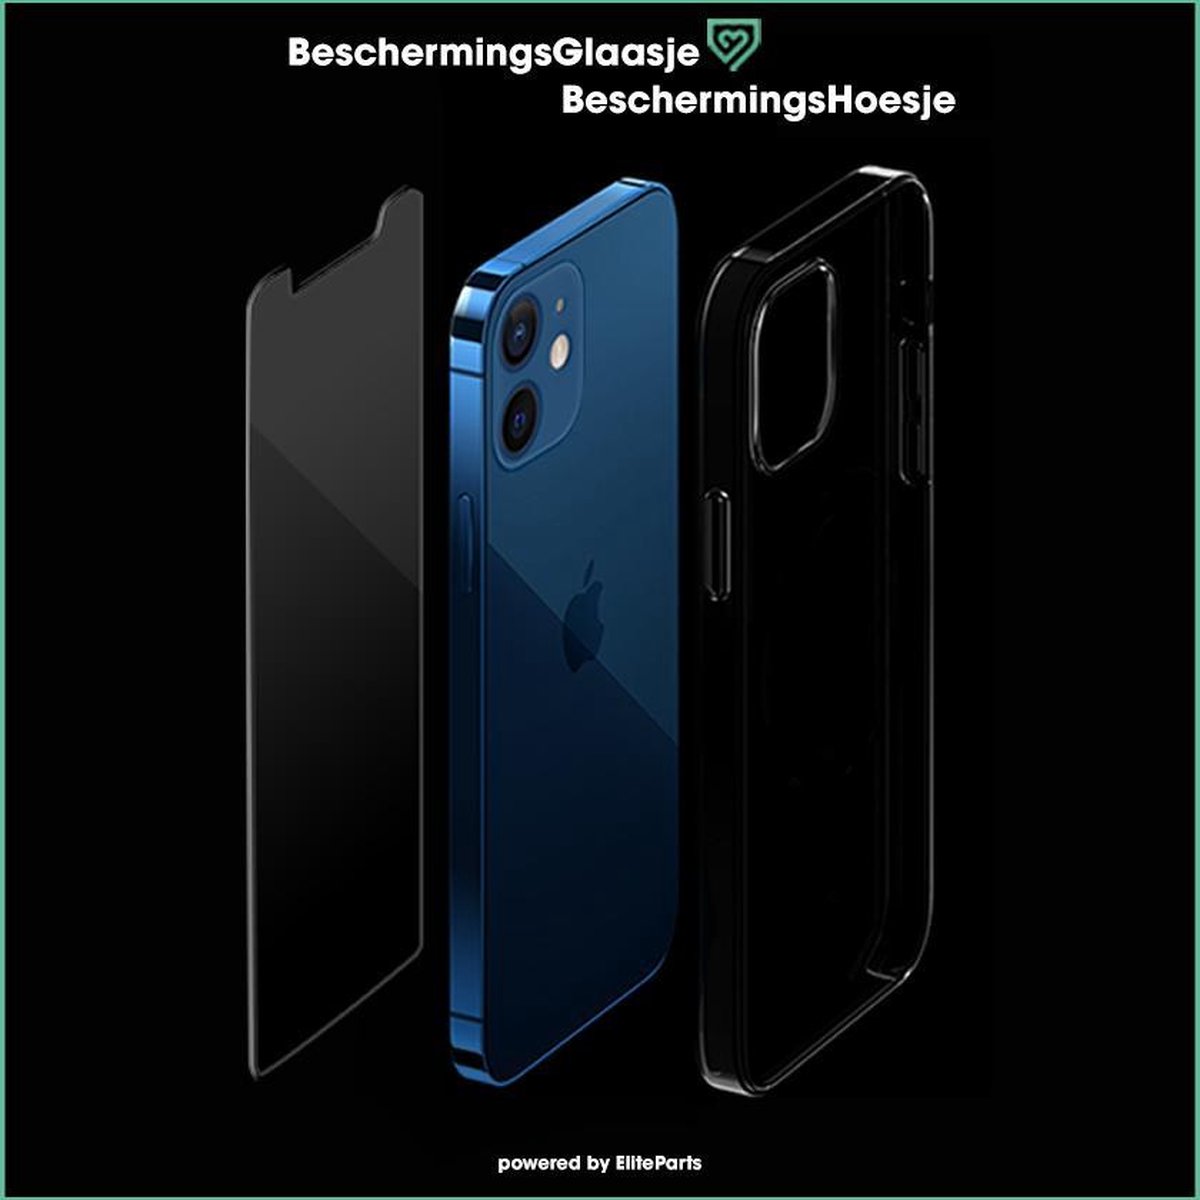 iPhone 12 combo deal BeschermingsHoesje x BeschermingsGlaasje| 6,1 inch| Elite Parts NL